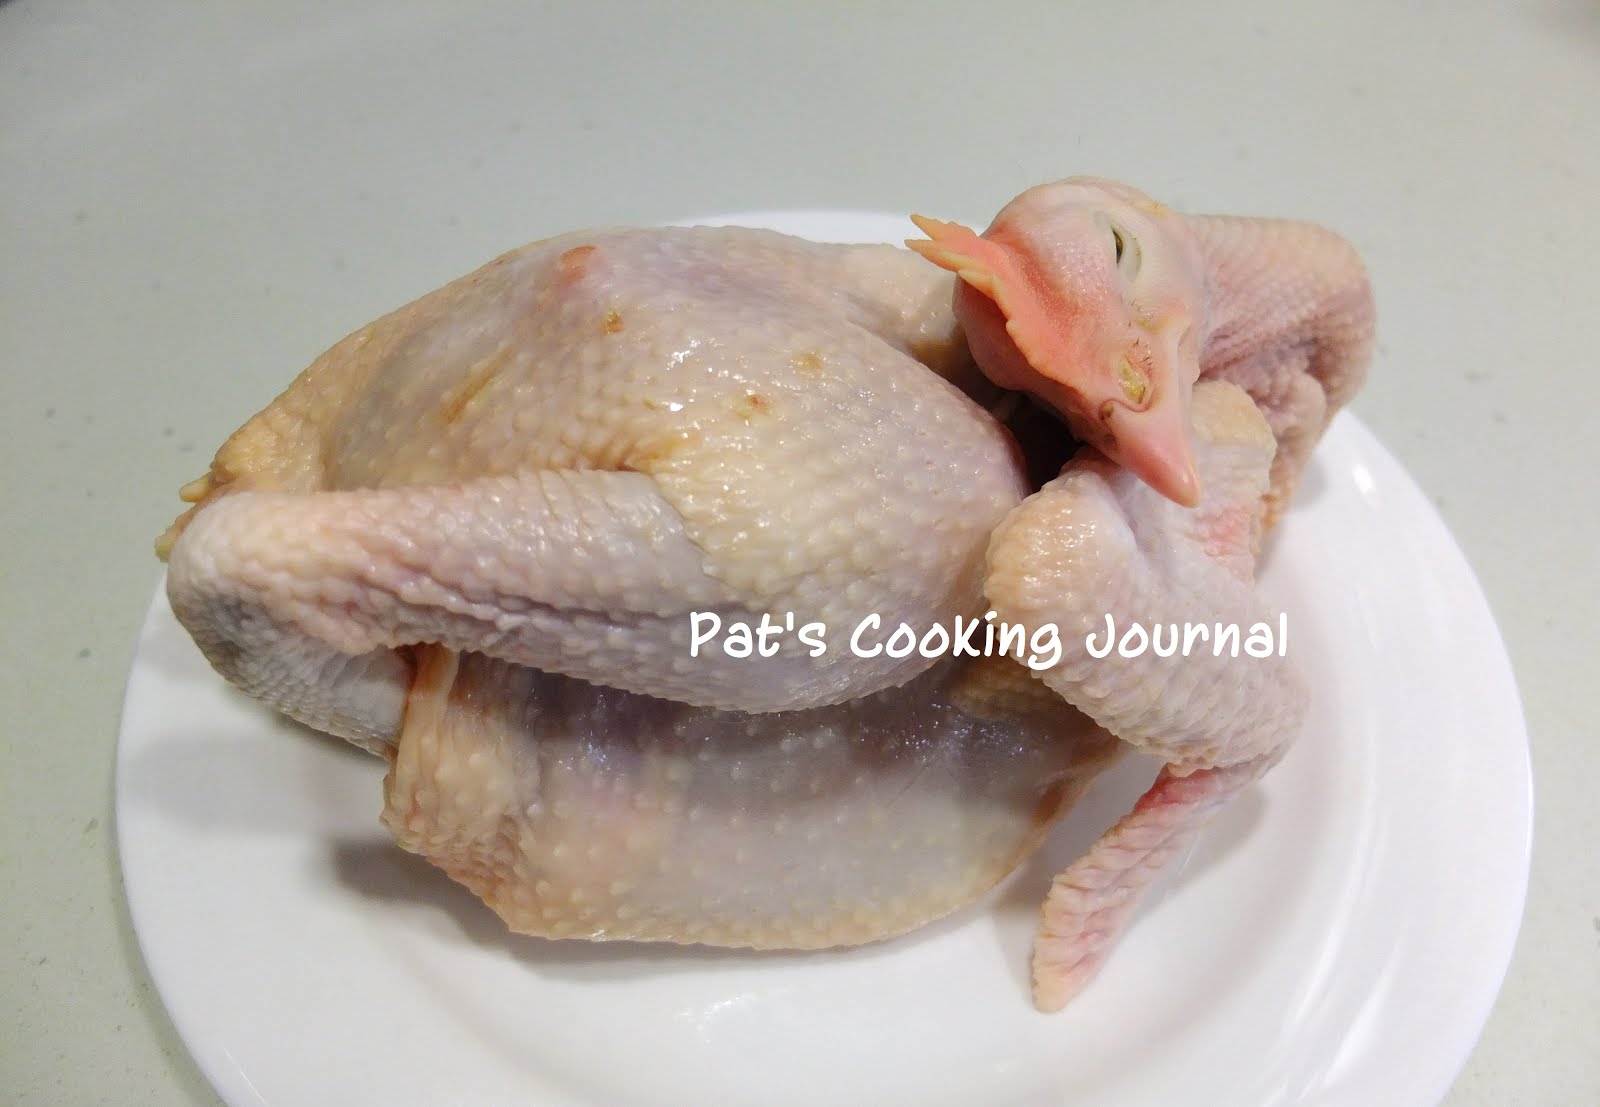 Australian  - Pat's Baking & Cooking Journal PP的烹飪· 烘培· 逸誌